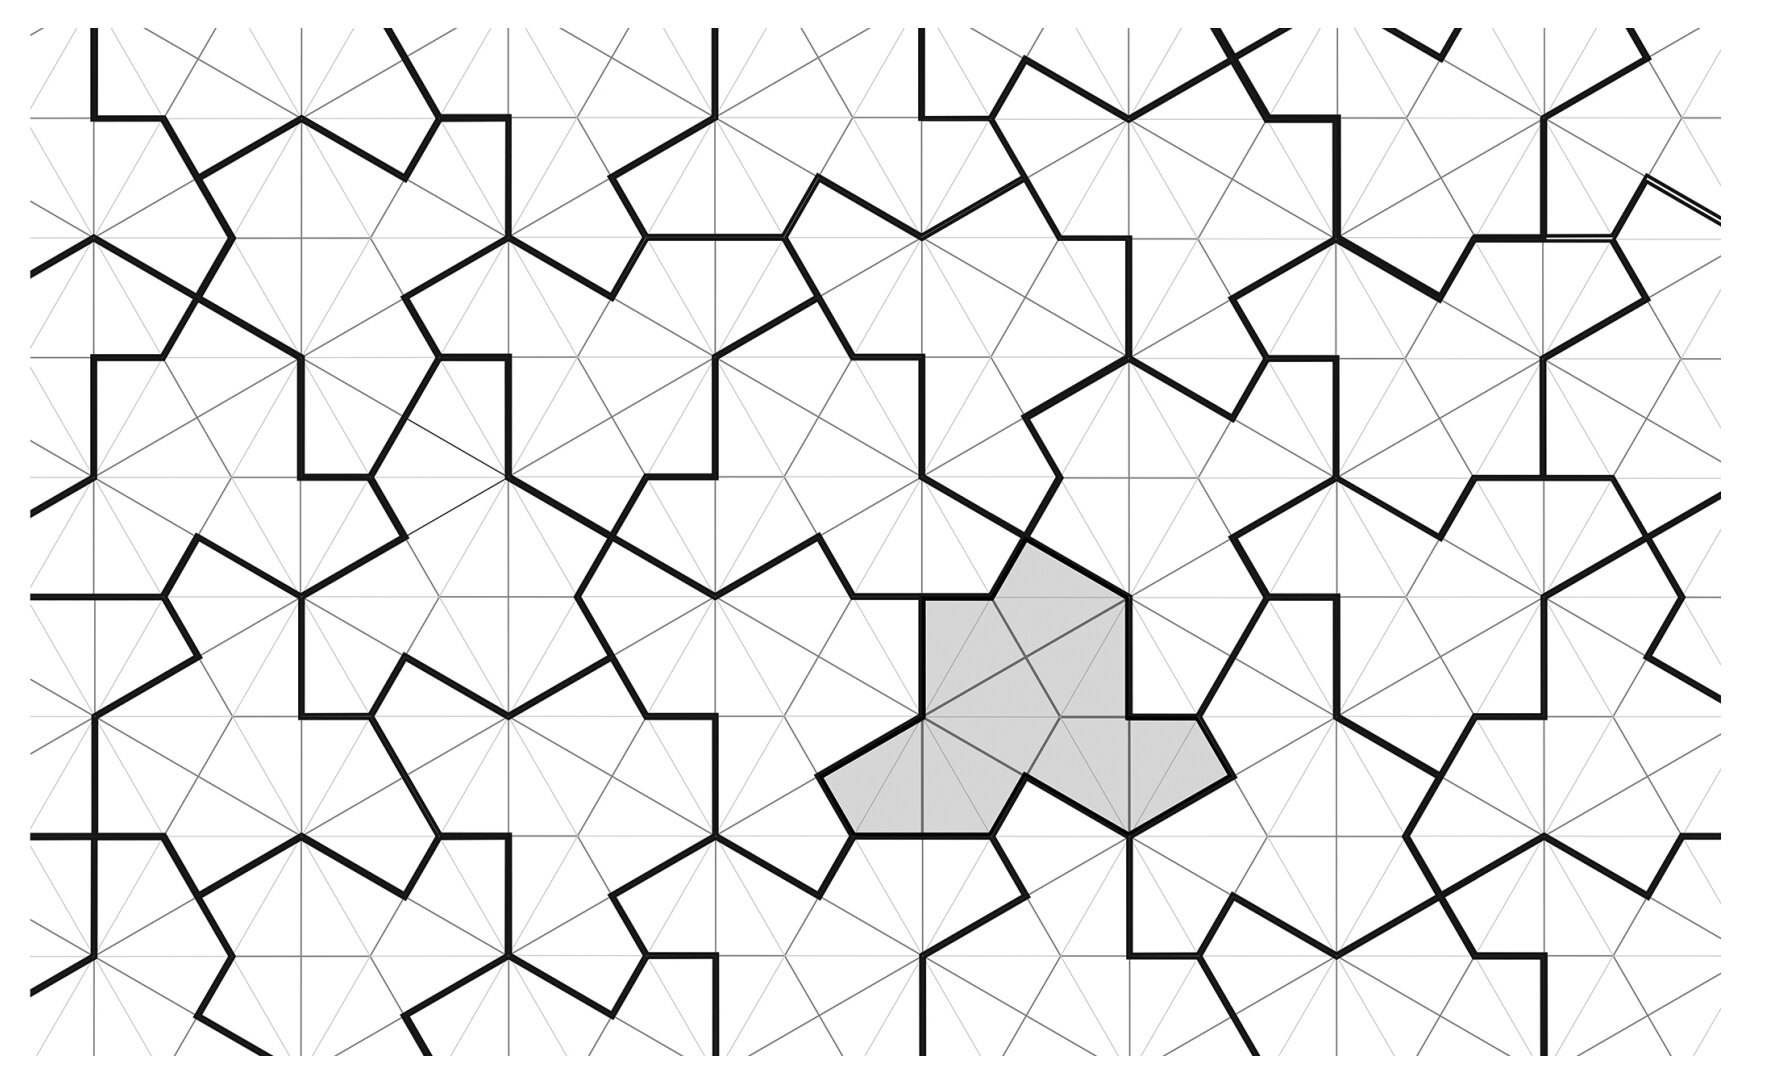 complex geometric shapes names